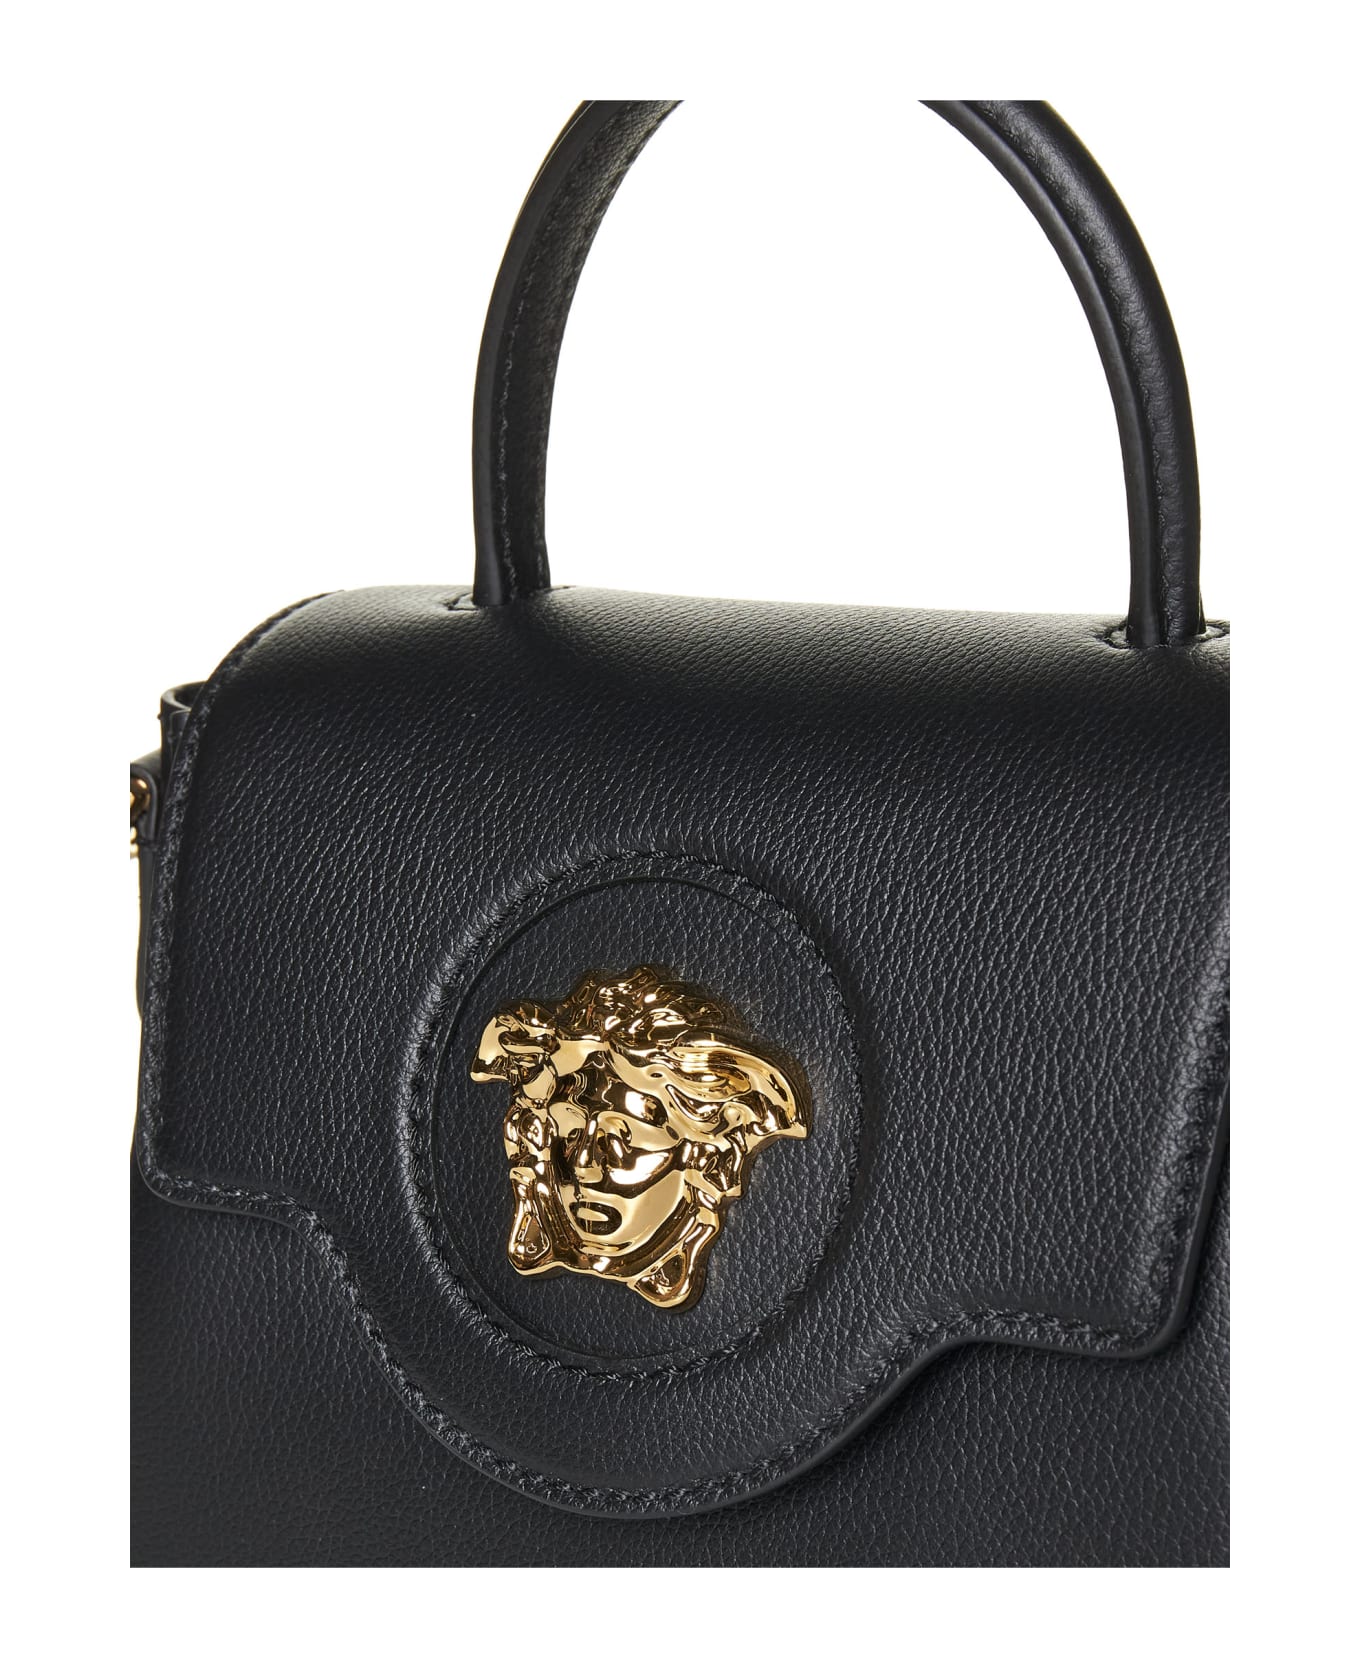 Versace La Medusa Small Leather Bag - Nero/oro Versace